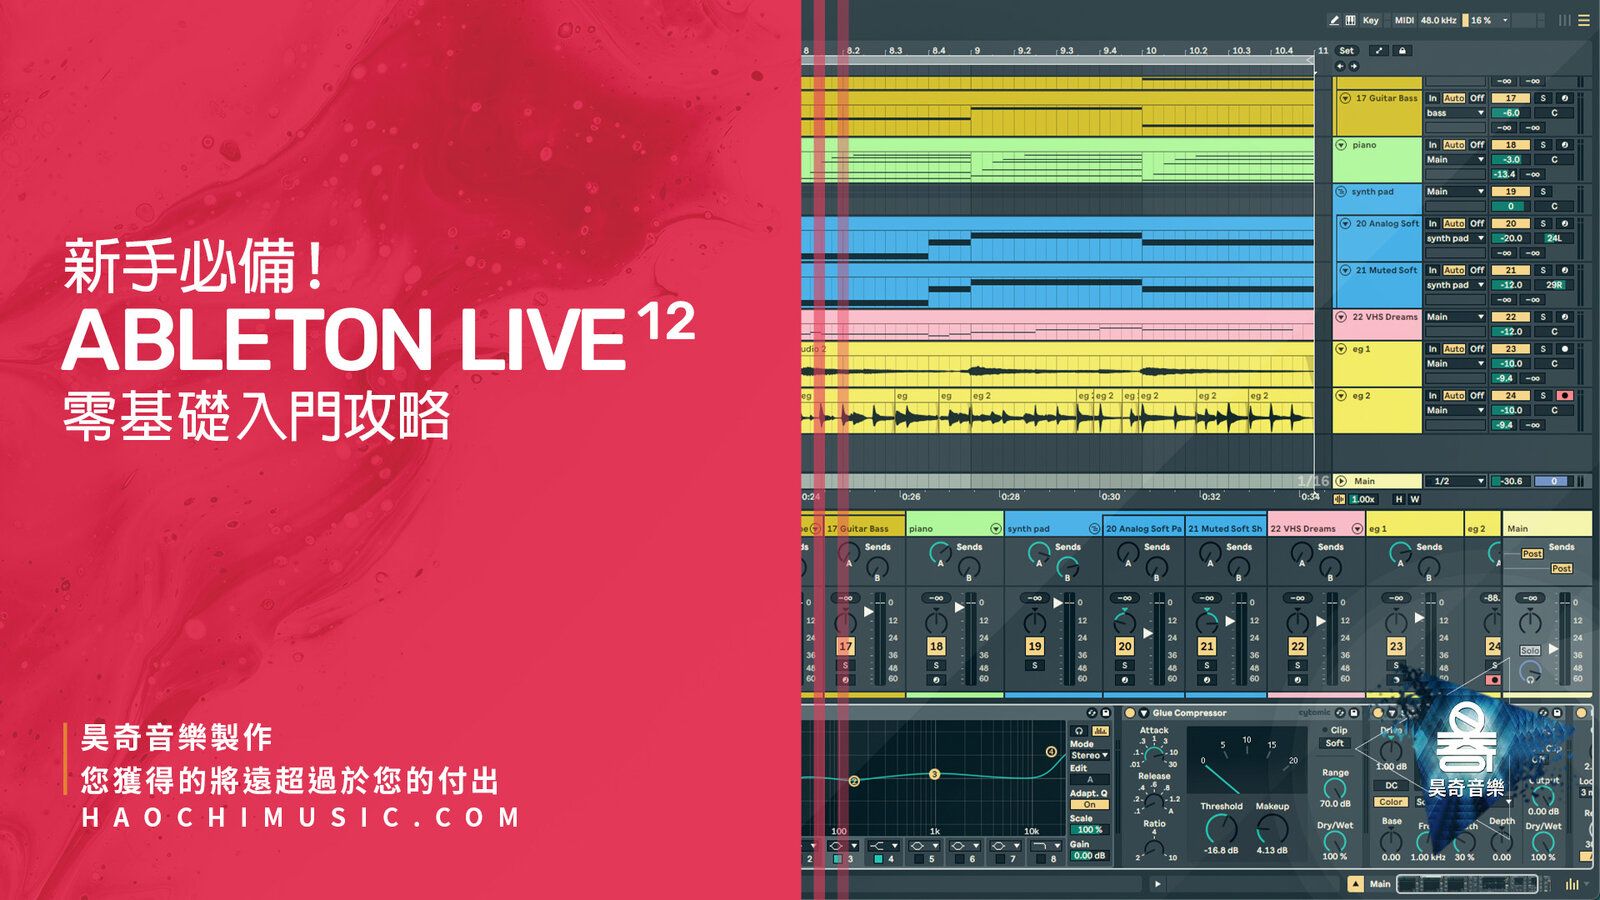 ableton live 12 入門攻略 copy.jpg